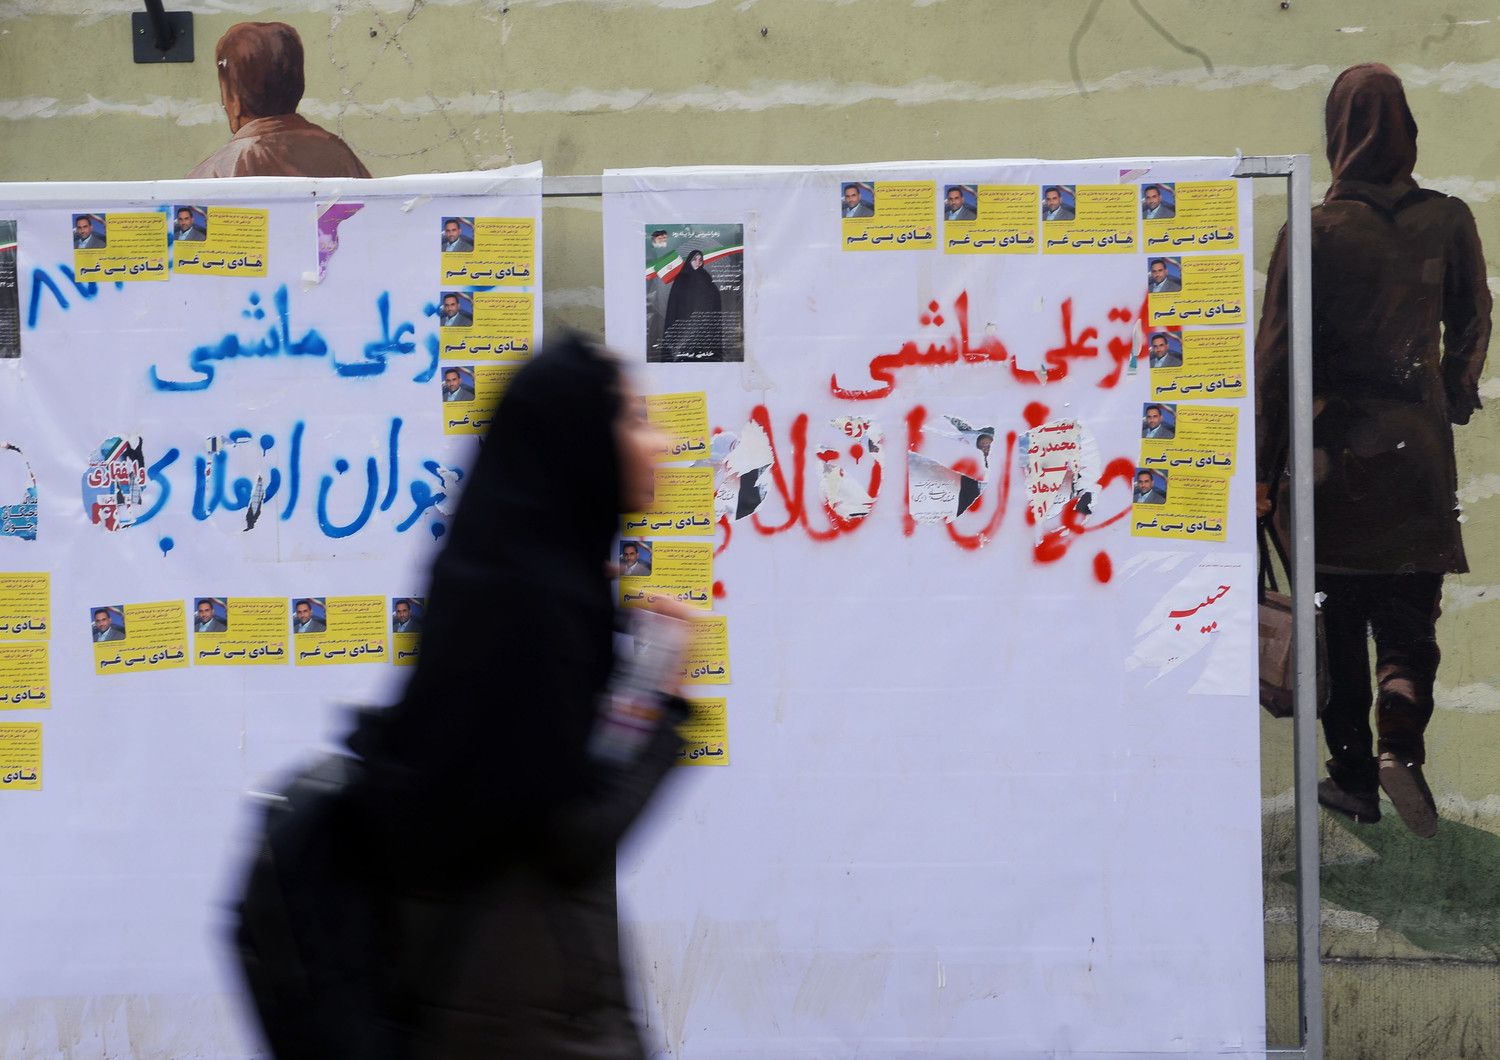 Una donna cammina davanti ai manifesti elettorali a Teheran